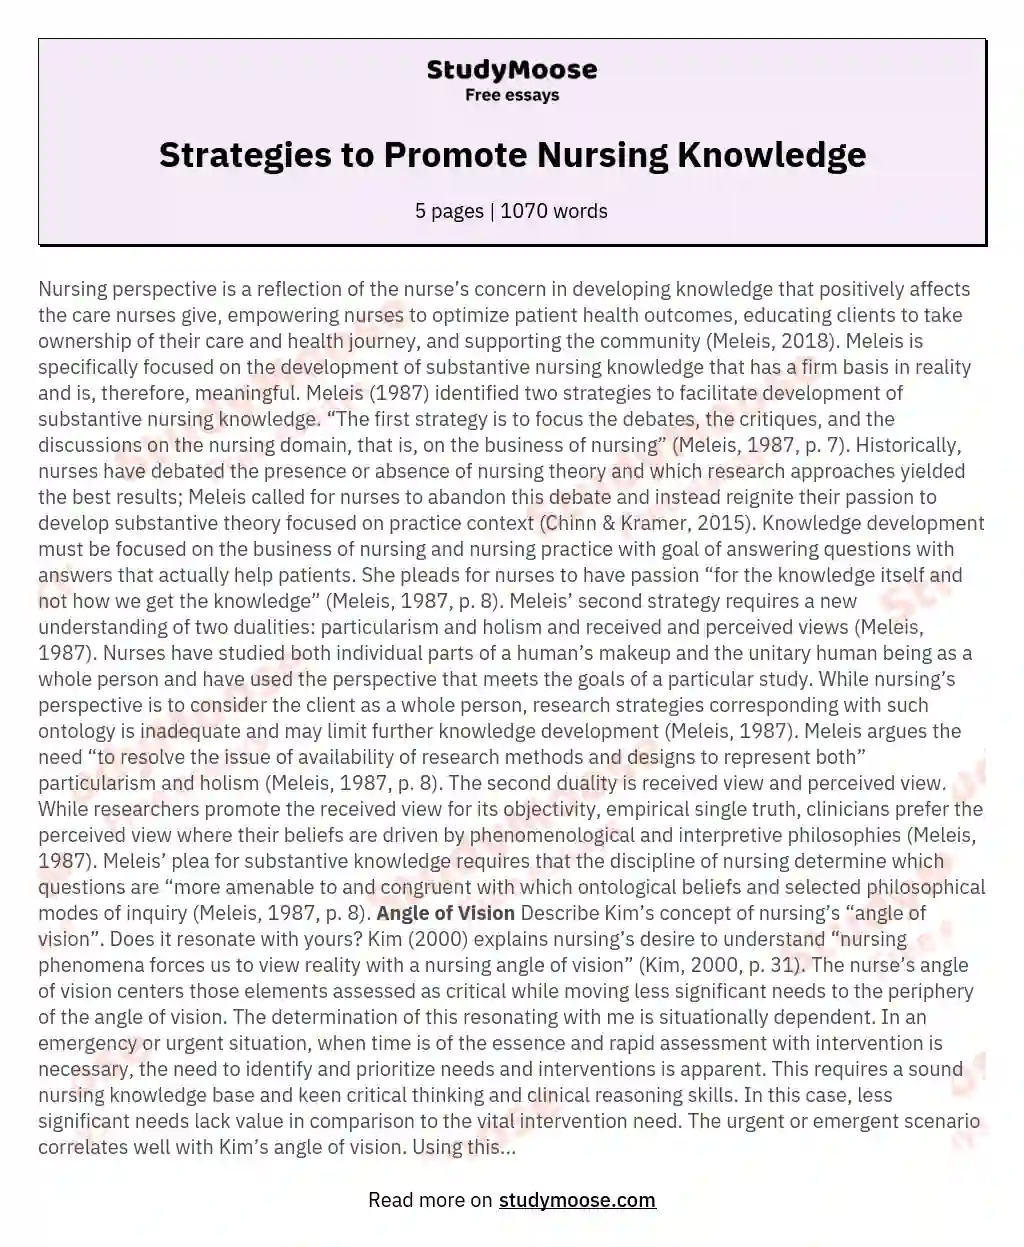 Strategies to Promote Nursing Knowledge essay